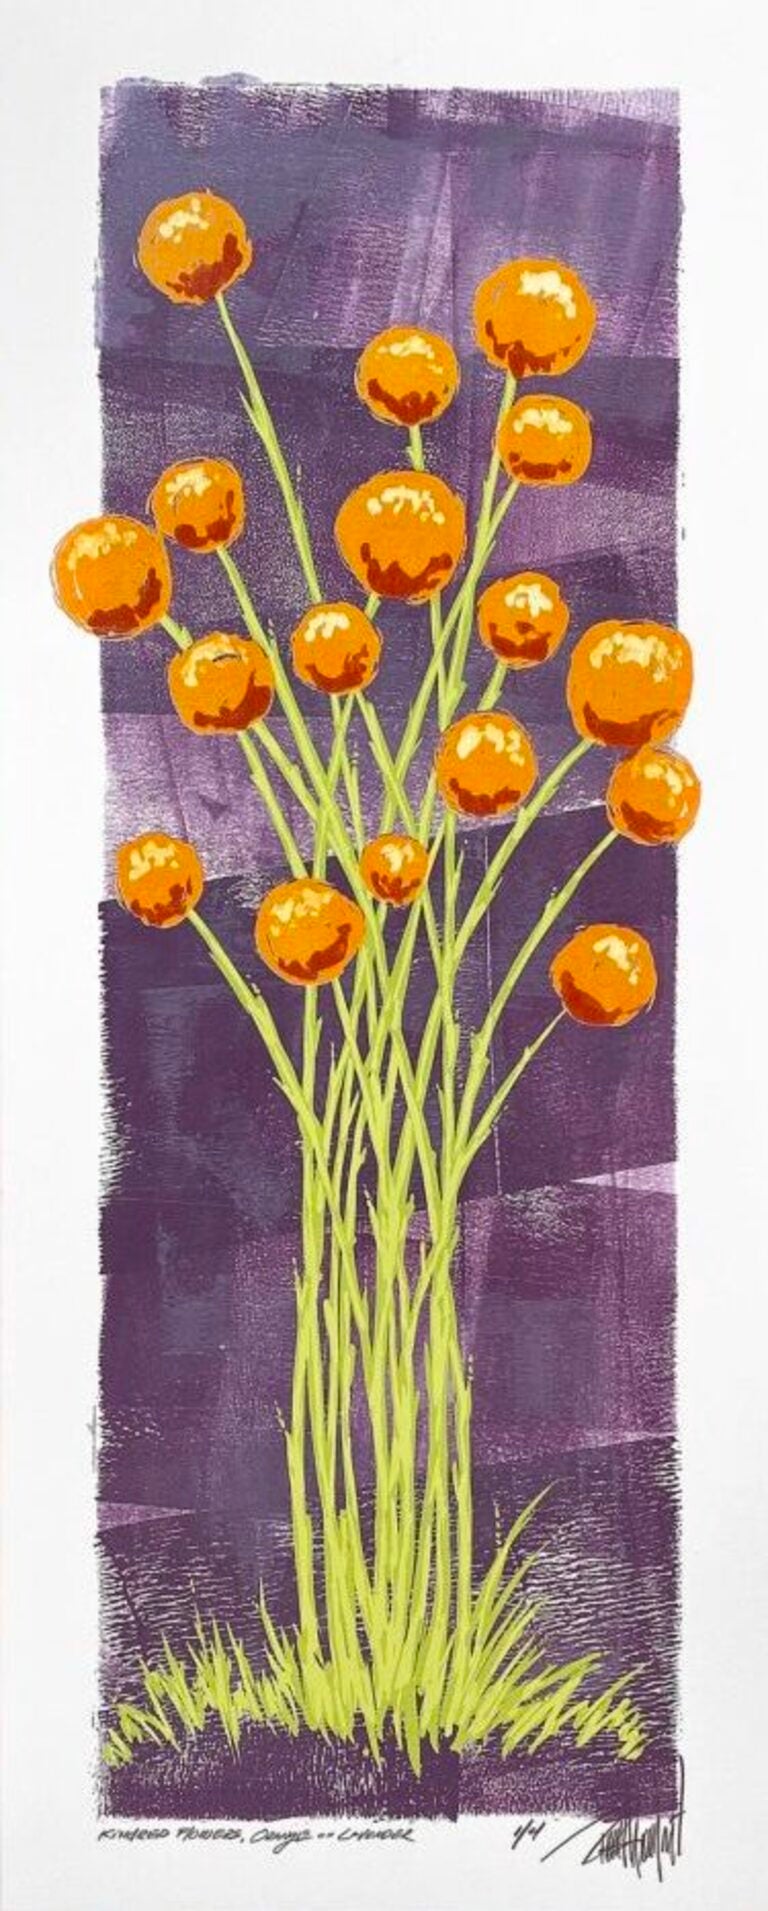 Terrell Thornhill  Landscape Print - Kindred Flowers, Orange on Lavender (2/4)